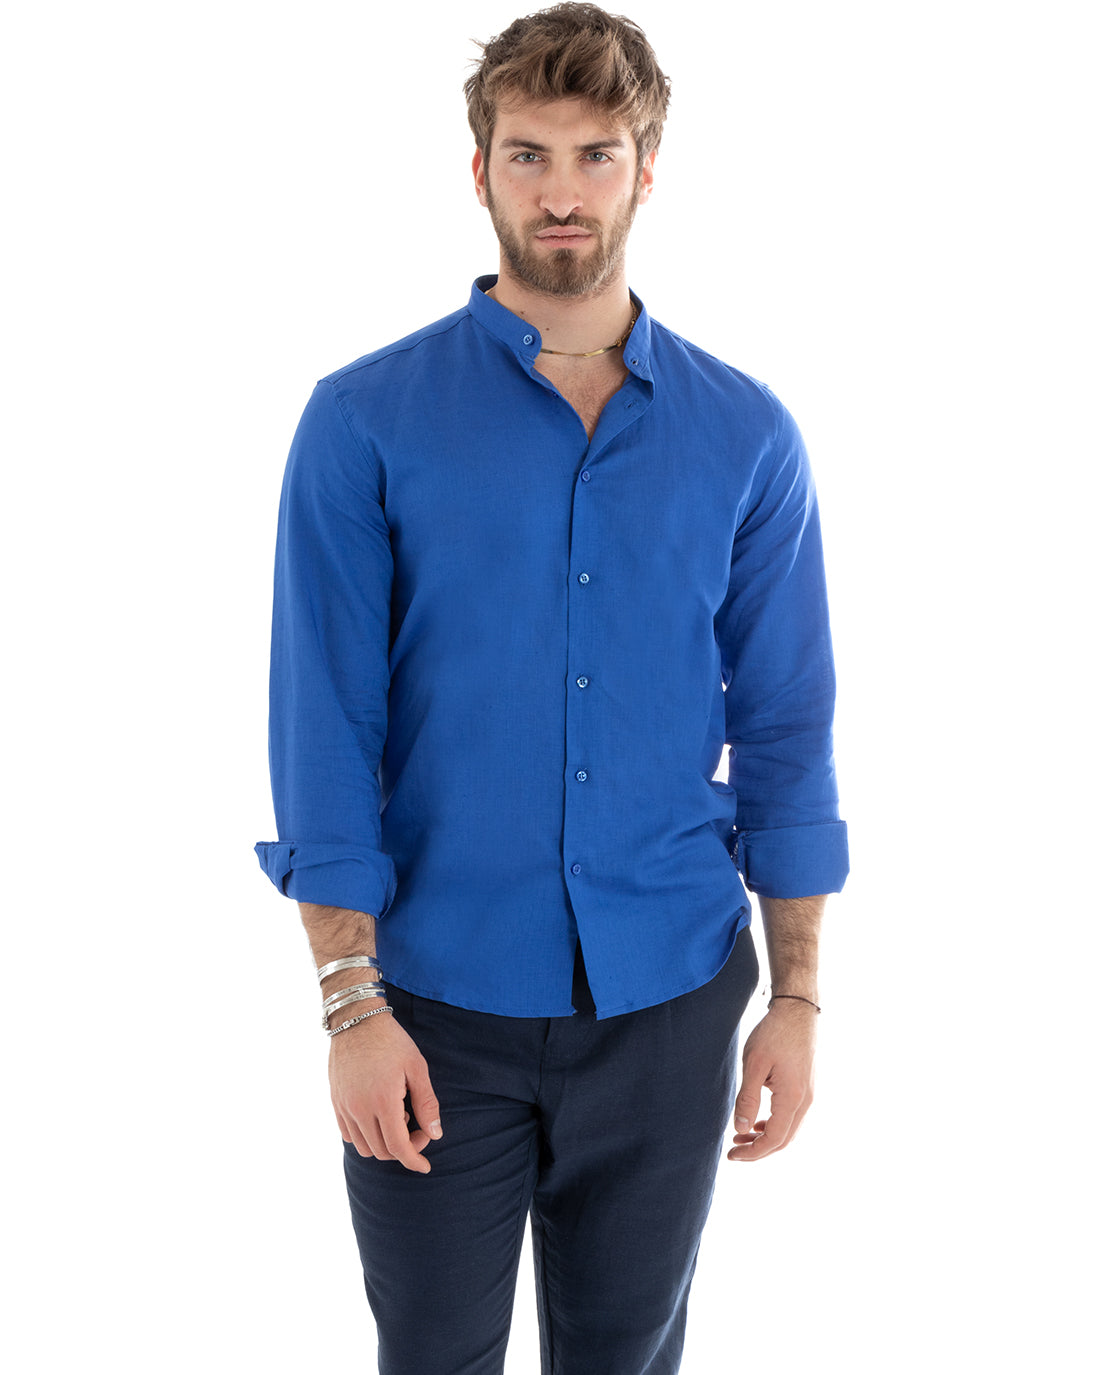 Men's Mandarin Collar Shirt Long Sleeve Linen Solid Color Tailored Royal Blue GIOSAL-C2669A